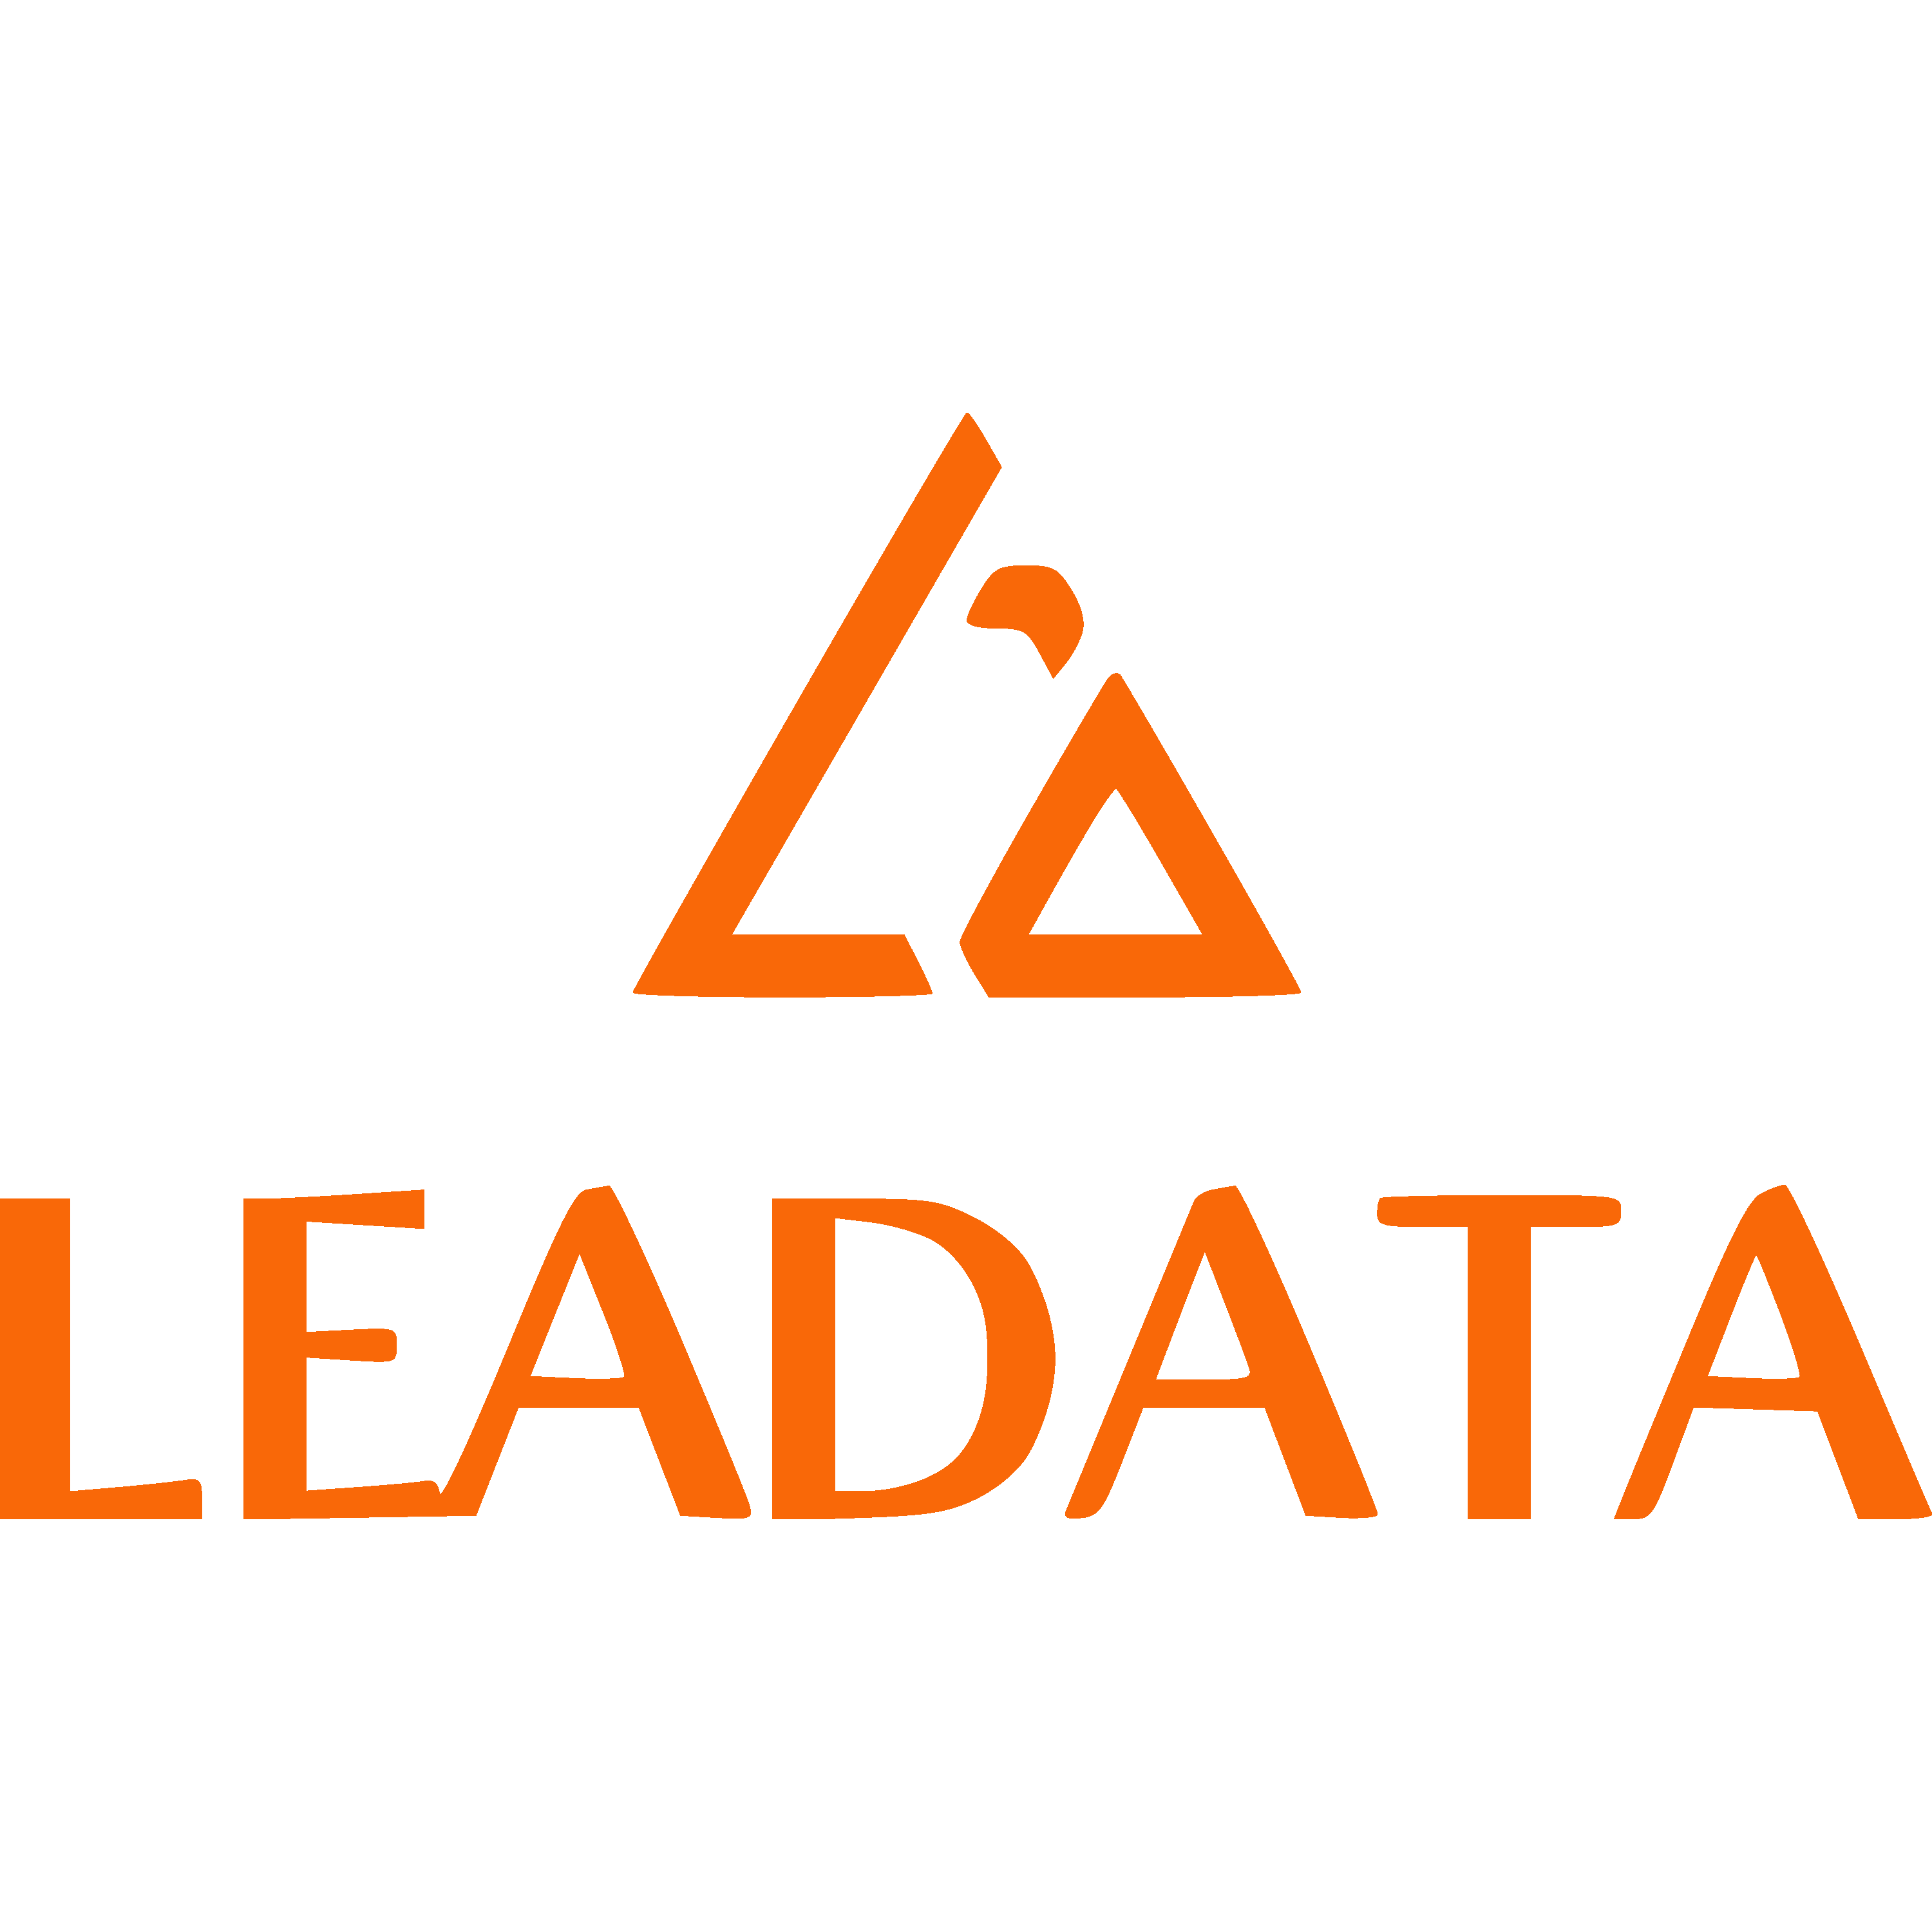 Lead Data Logo  Transparent Gallery